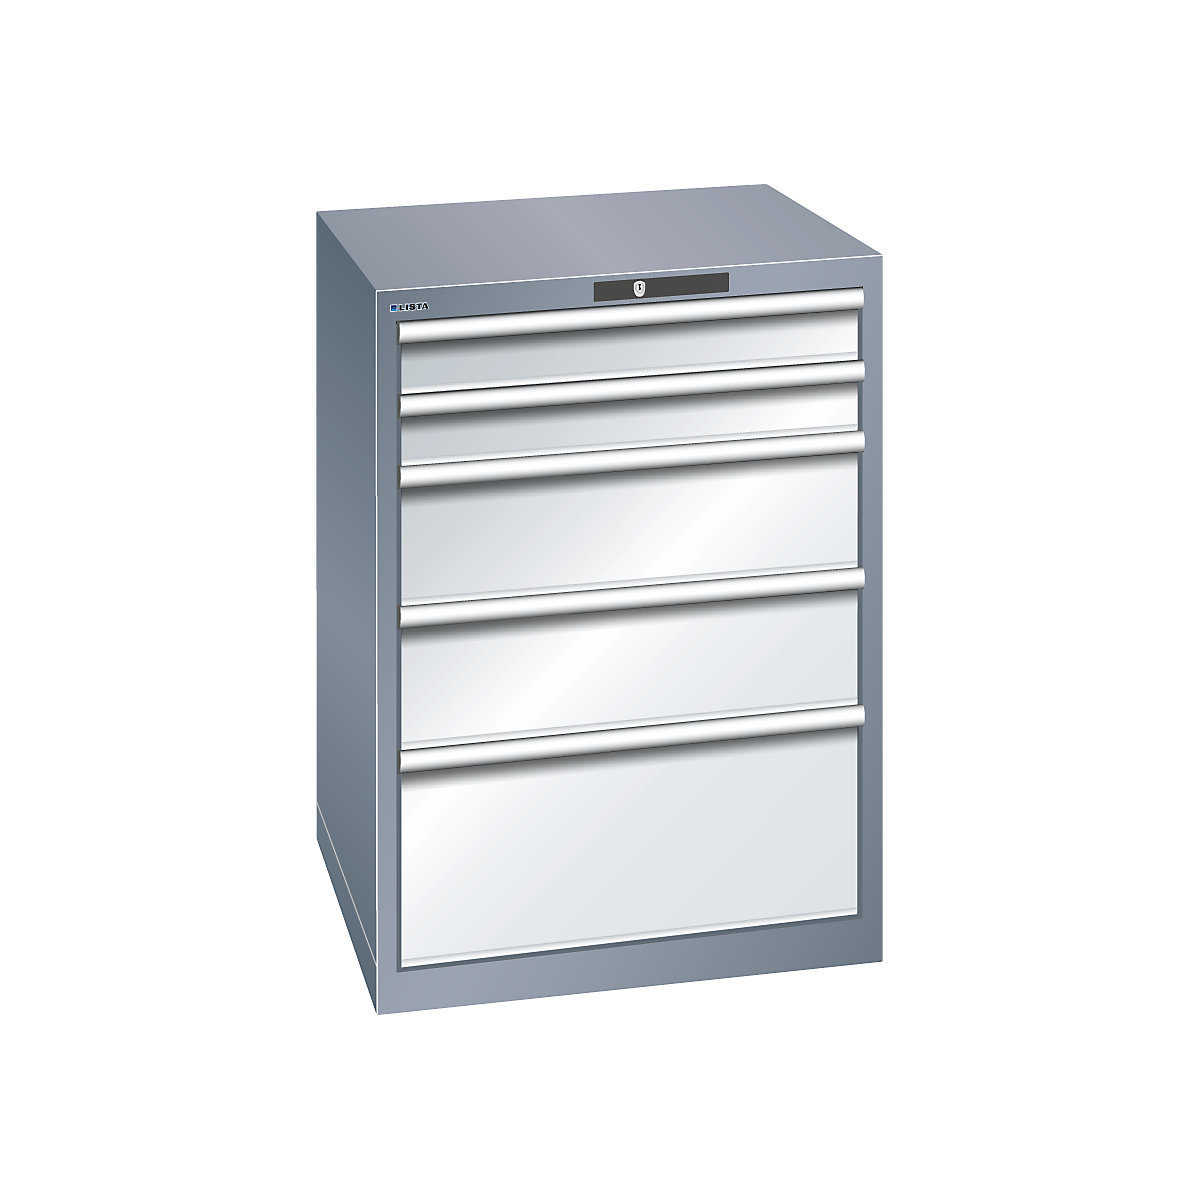 Drawer cupboard, 5 drawers – LISTA, WxDxH 717 x 725 x 1000 mm, grey metallic / light grey-4